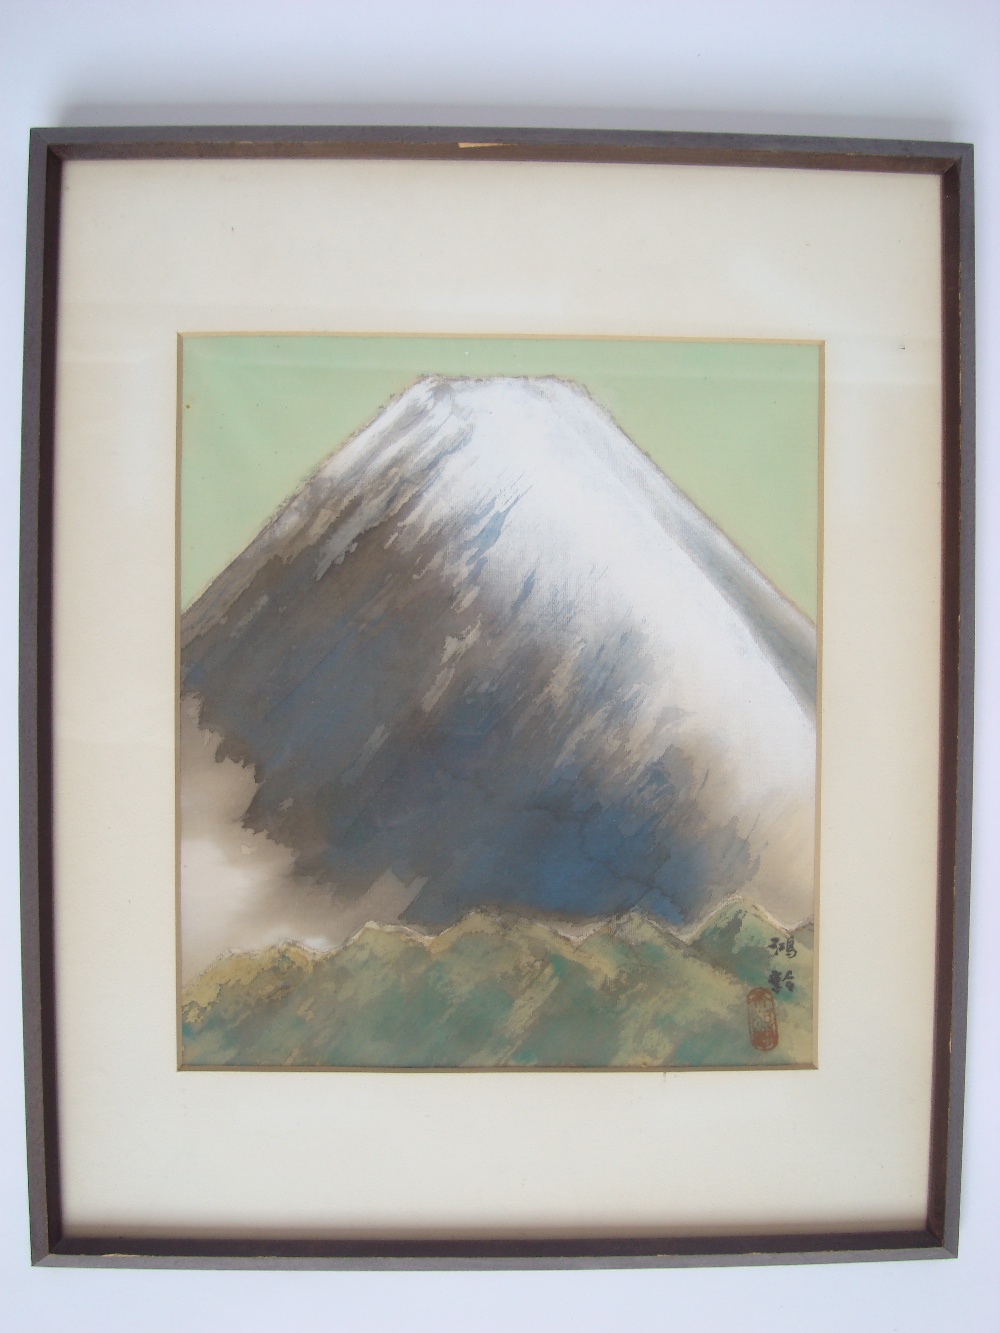 Kohrei Imamua (20th Century Japanese).
Mt Fuji, watercolour on silk, signed dated 1970, f/g.